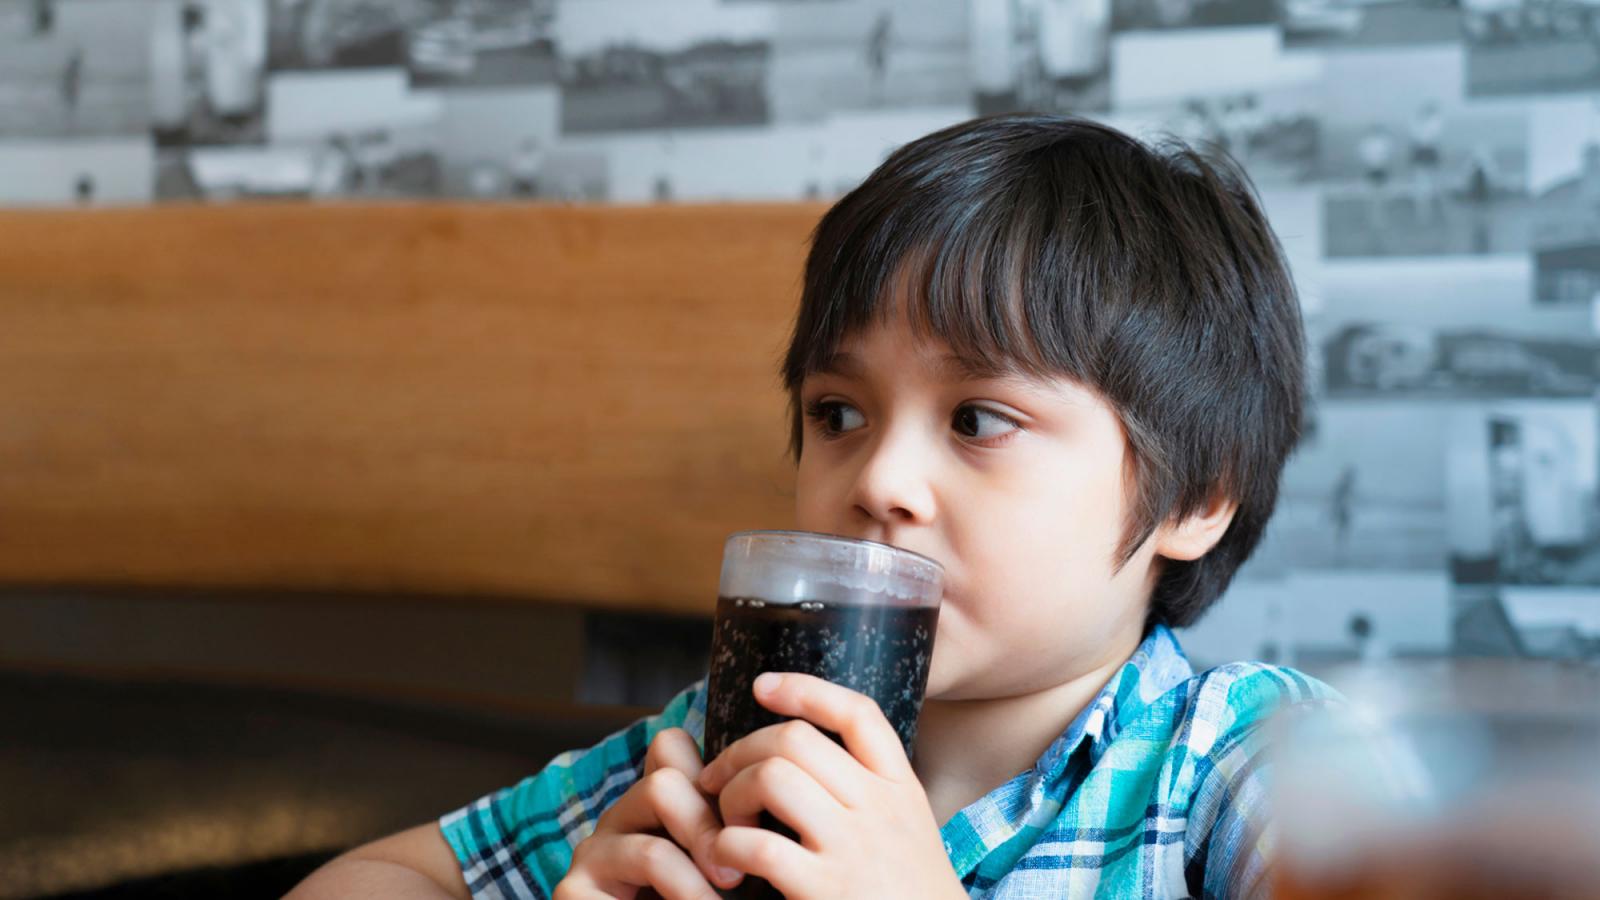 Child drinking a soda.